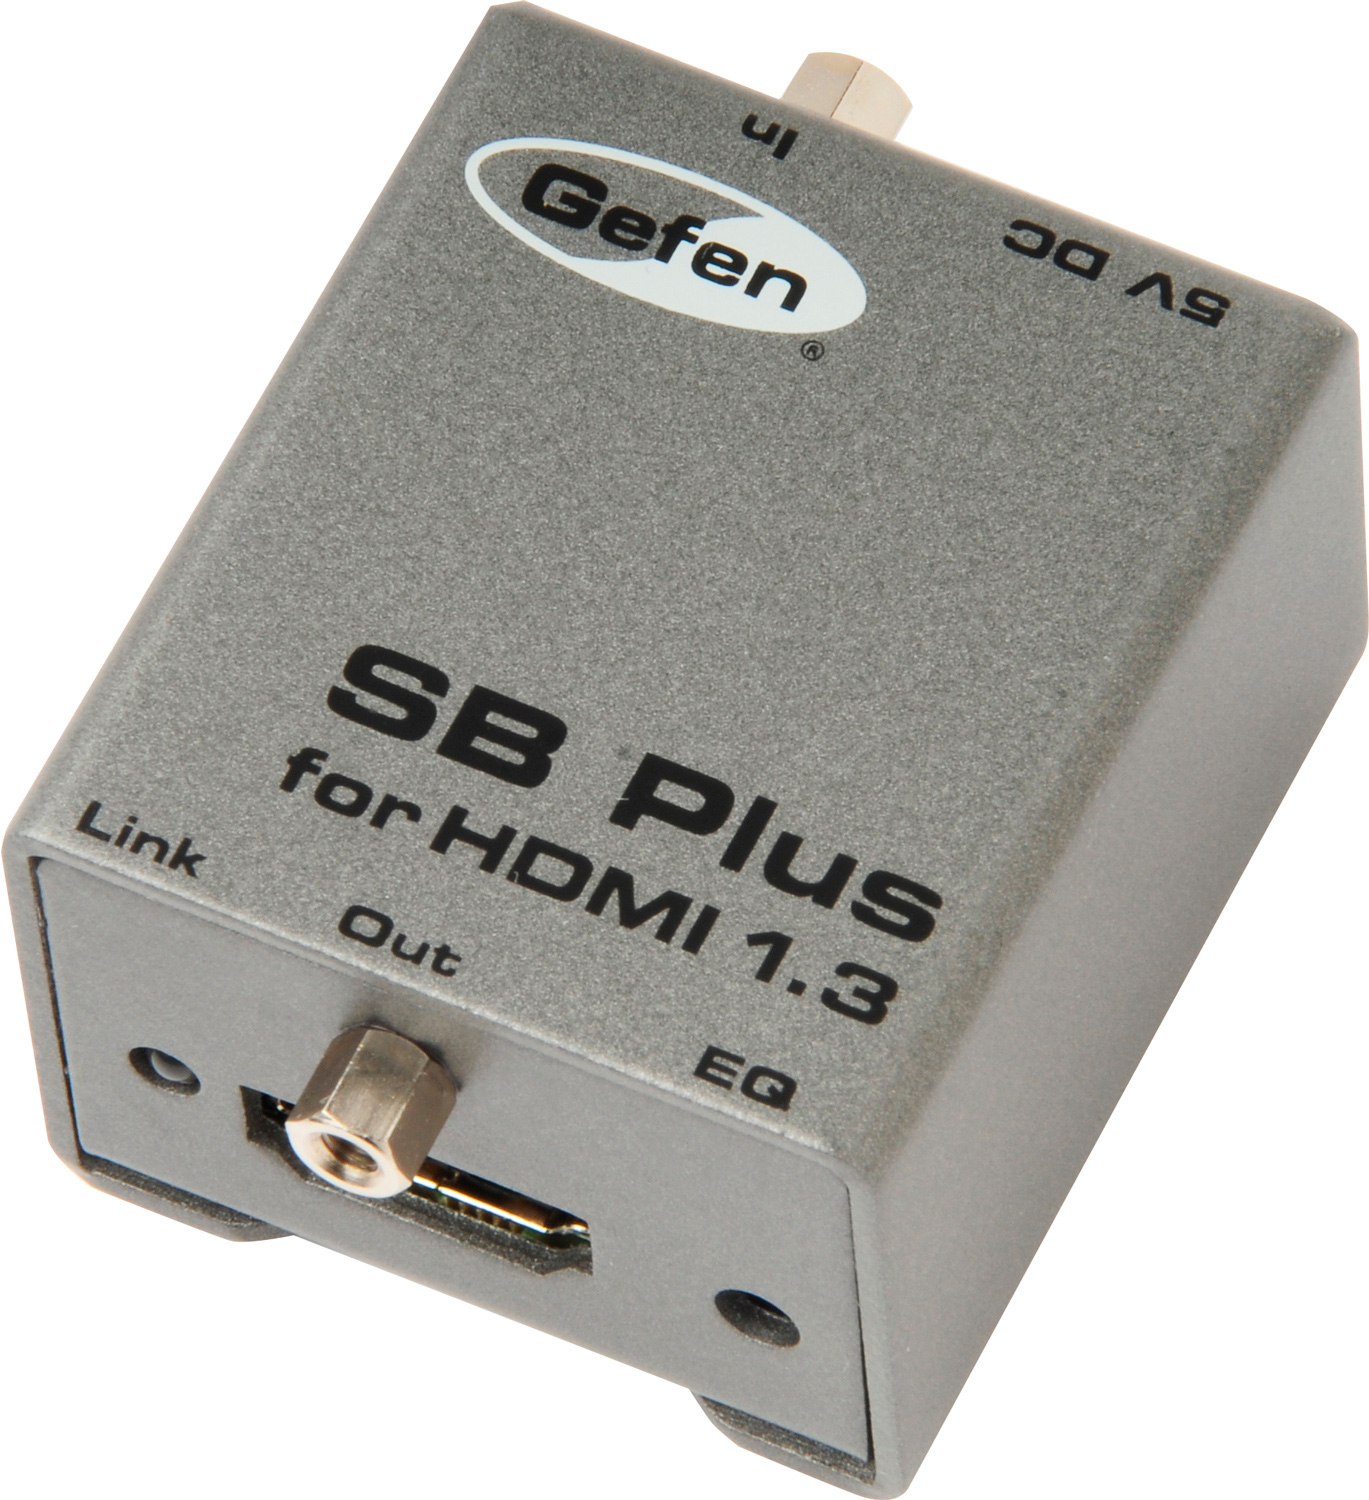 Gefen EXT-HDMI1.3-141SBP Super Booster Plus for HDMI 1.3 GEF-141SBP